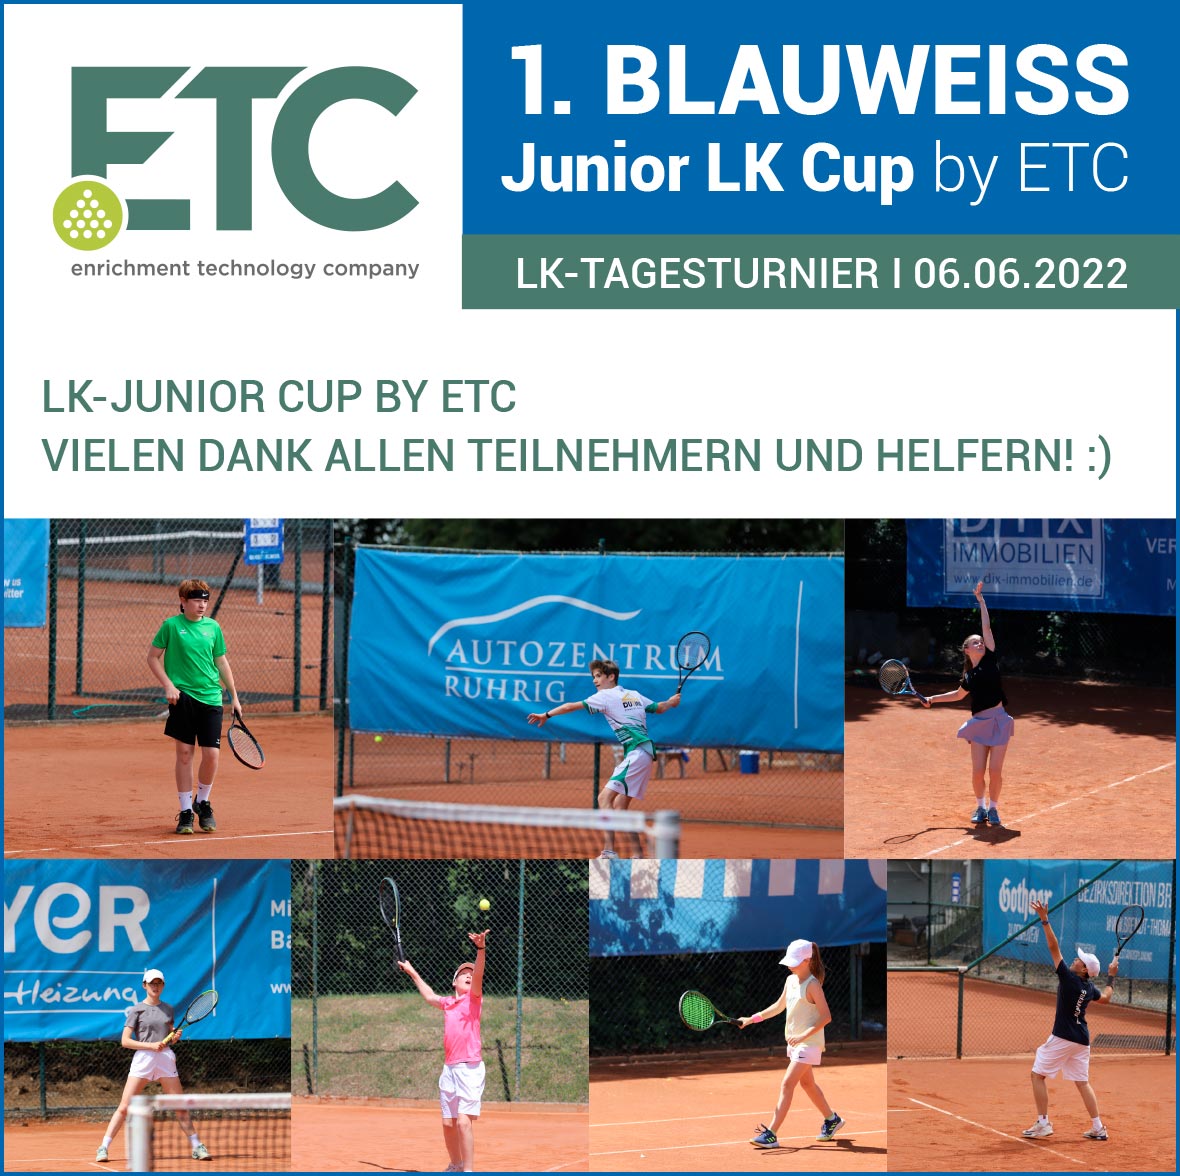 BLAUWEISS Junior LK Cup by ETC